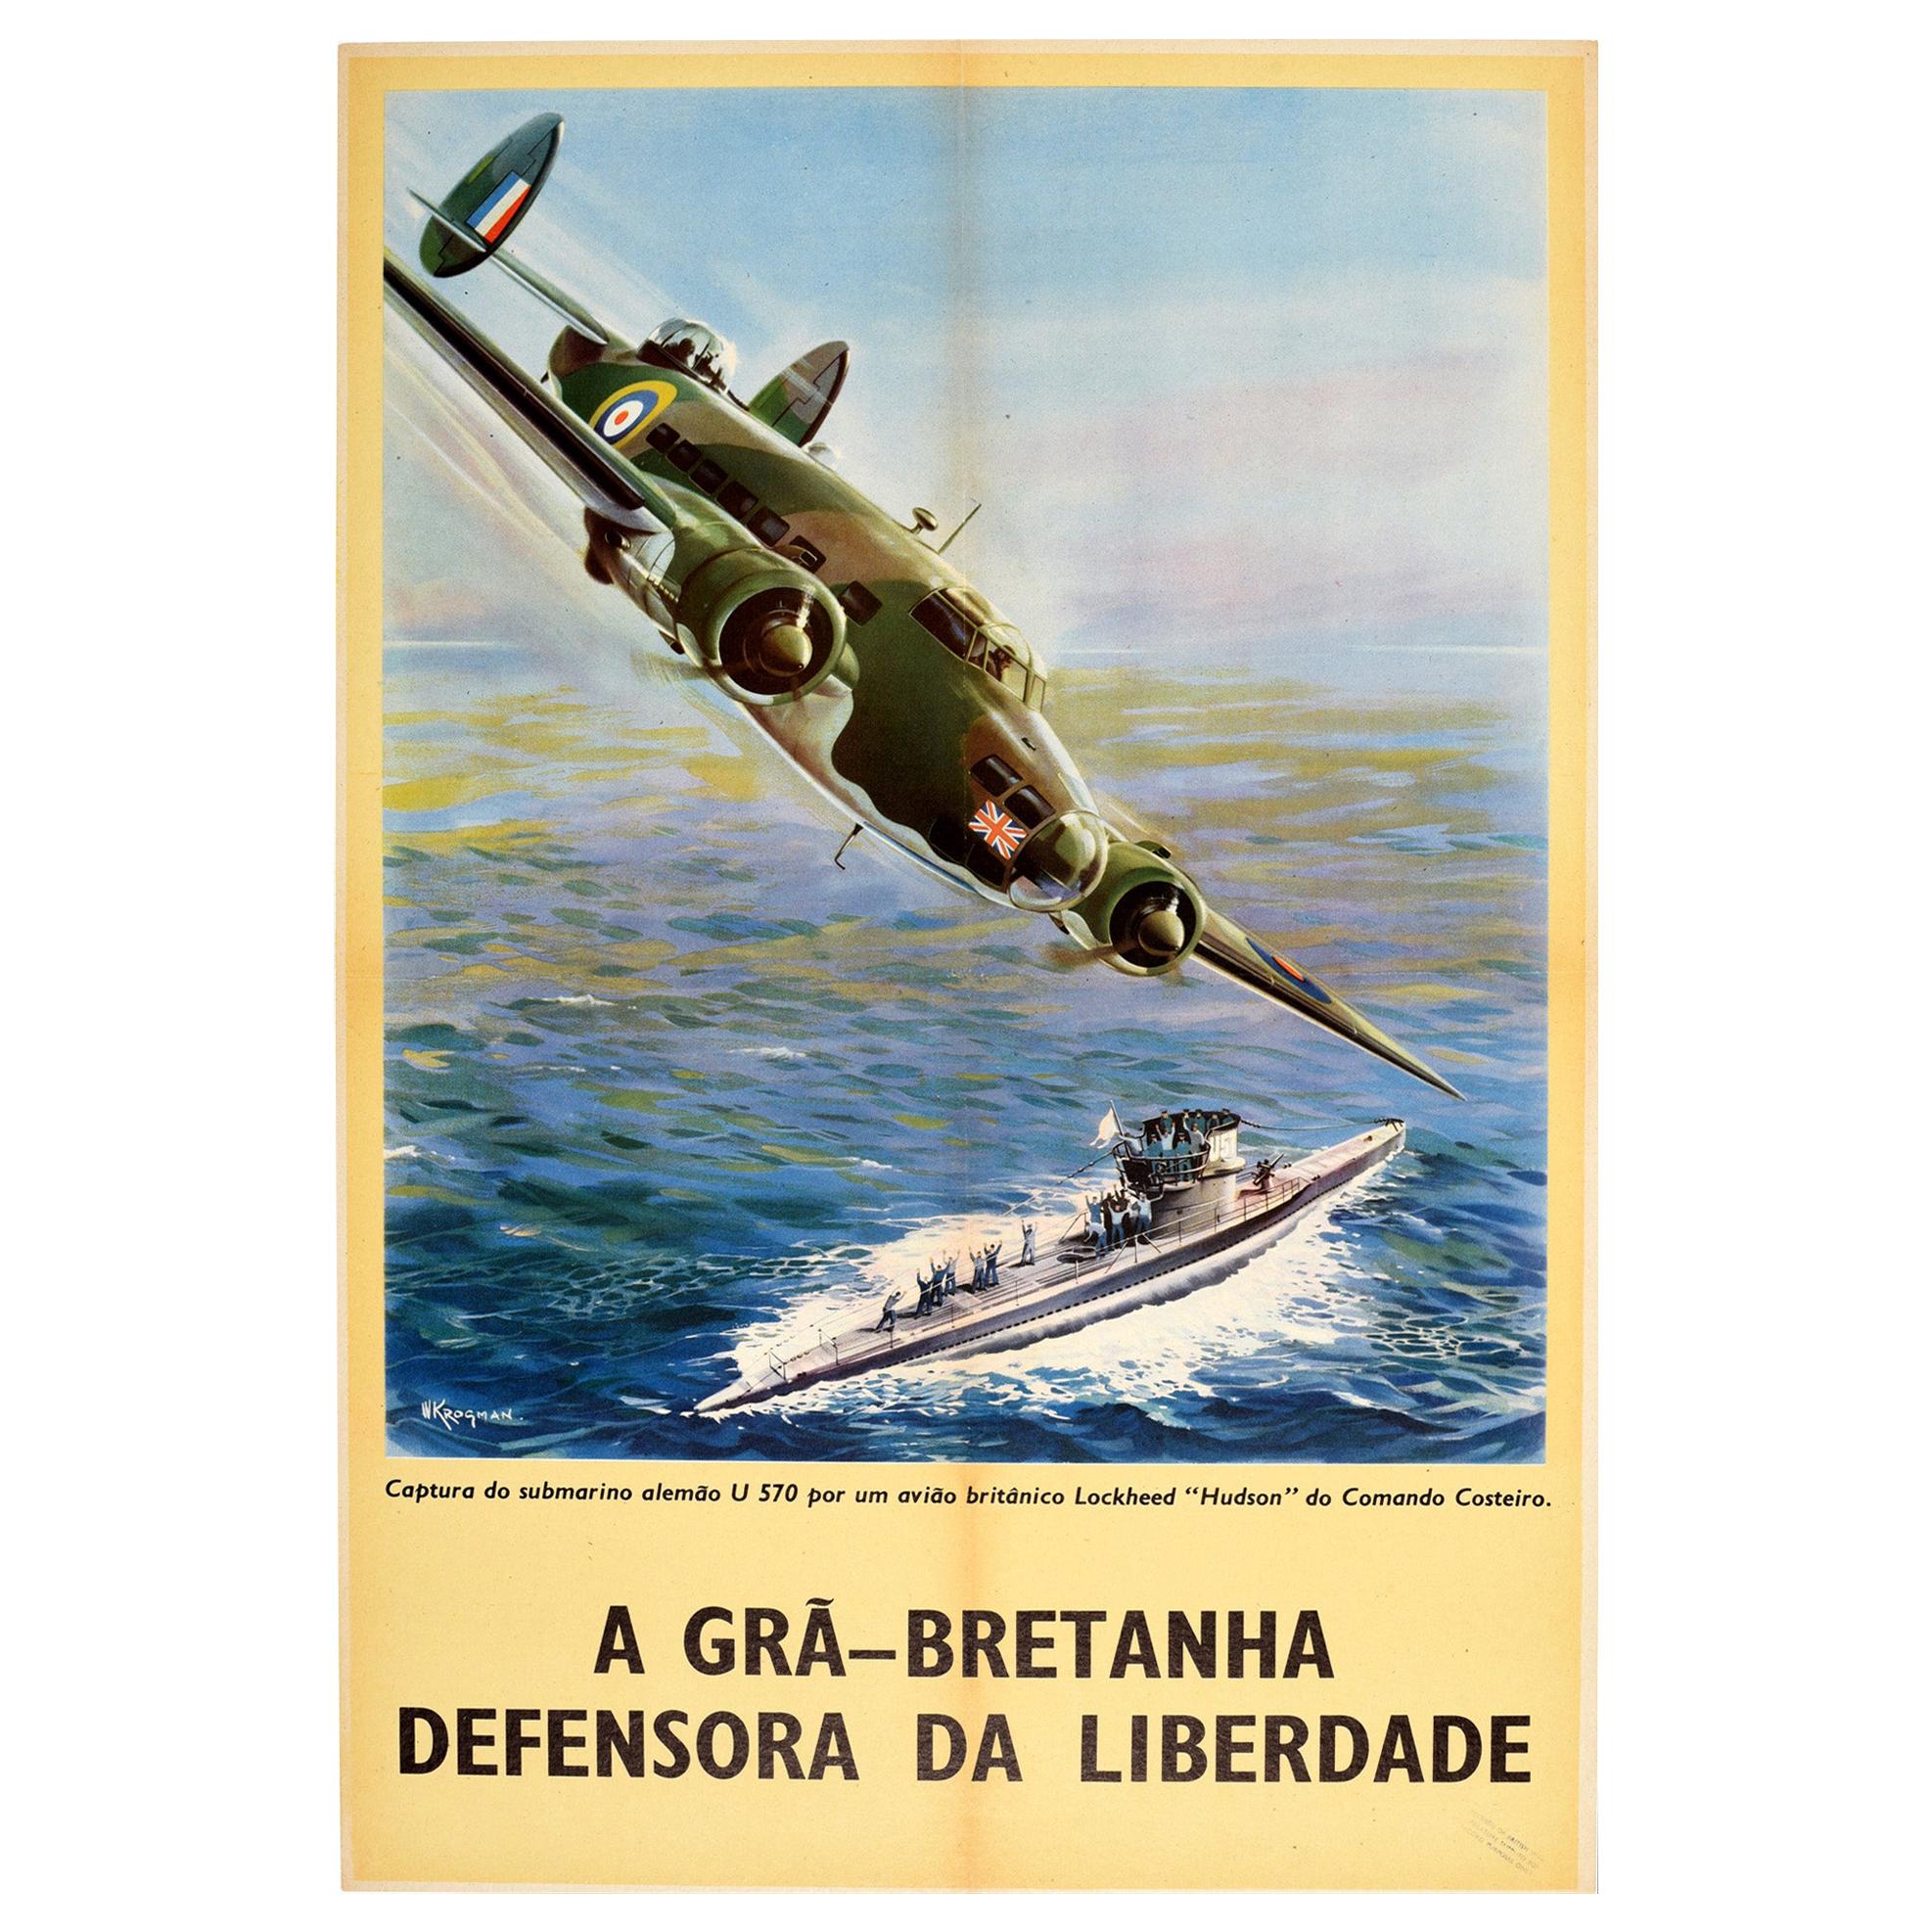 Original Vintage WWII Poster RAF Coastal Command Lockheed Hudson Submarine Uboat For Sale